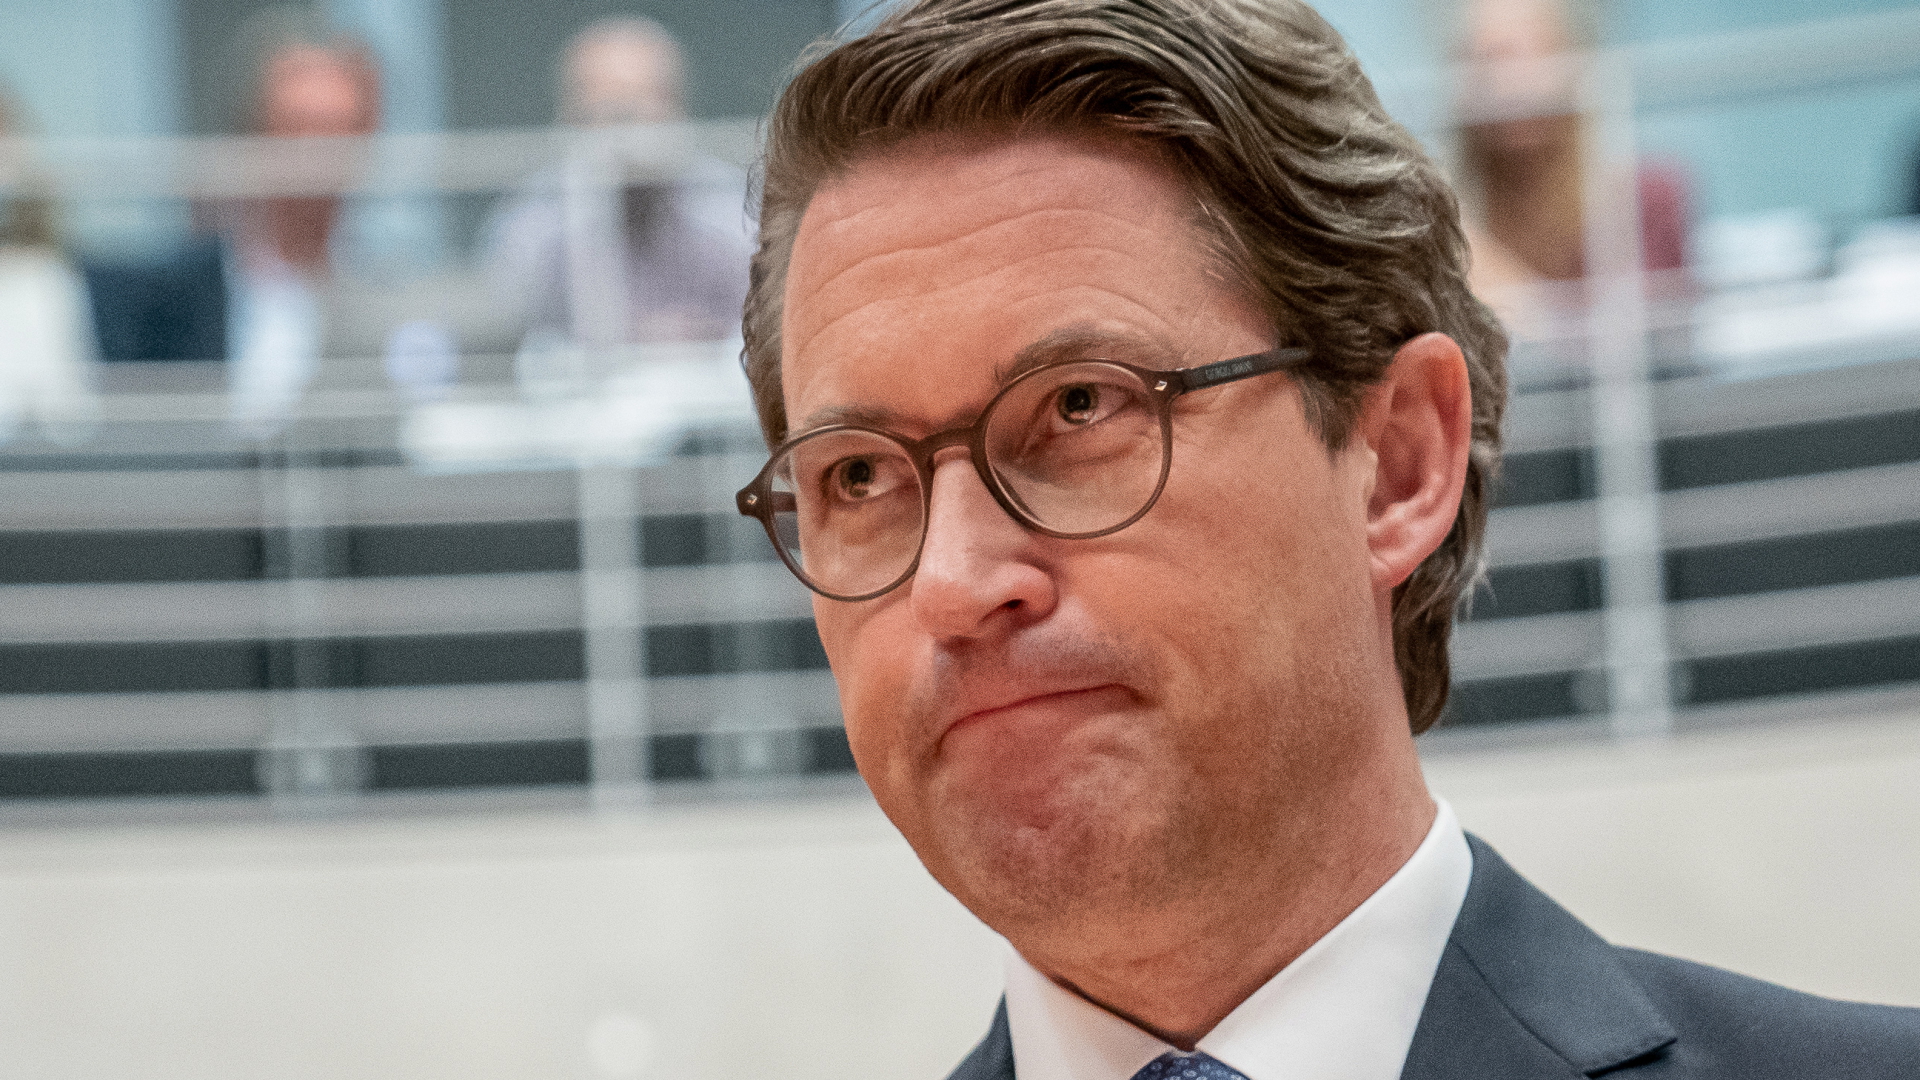 Verkehrsminister Scheuer als Zeige vor dem Untersuchungsausschuss zur Pkw-Maut im Oktober 2020 | dpa